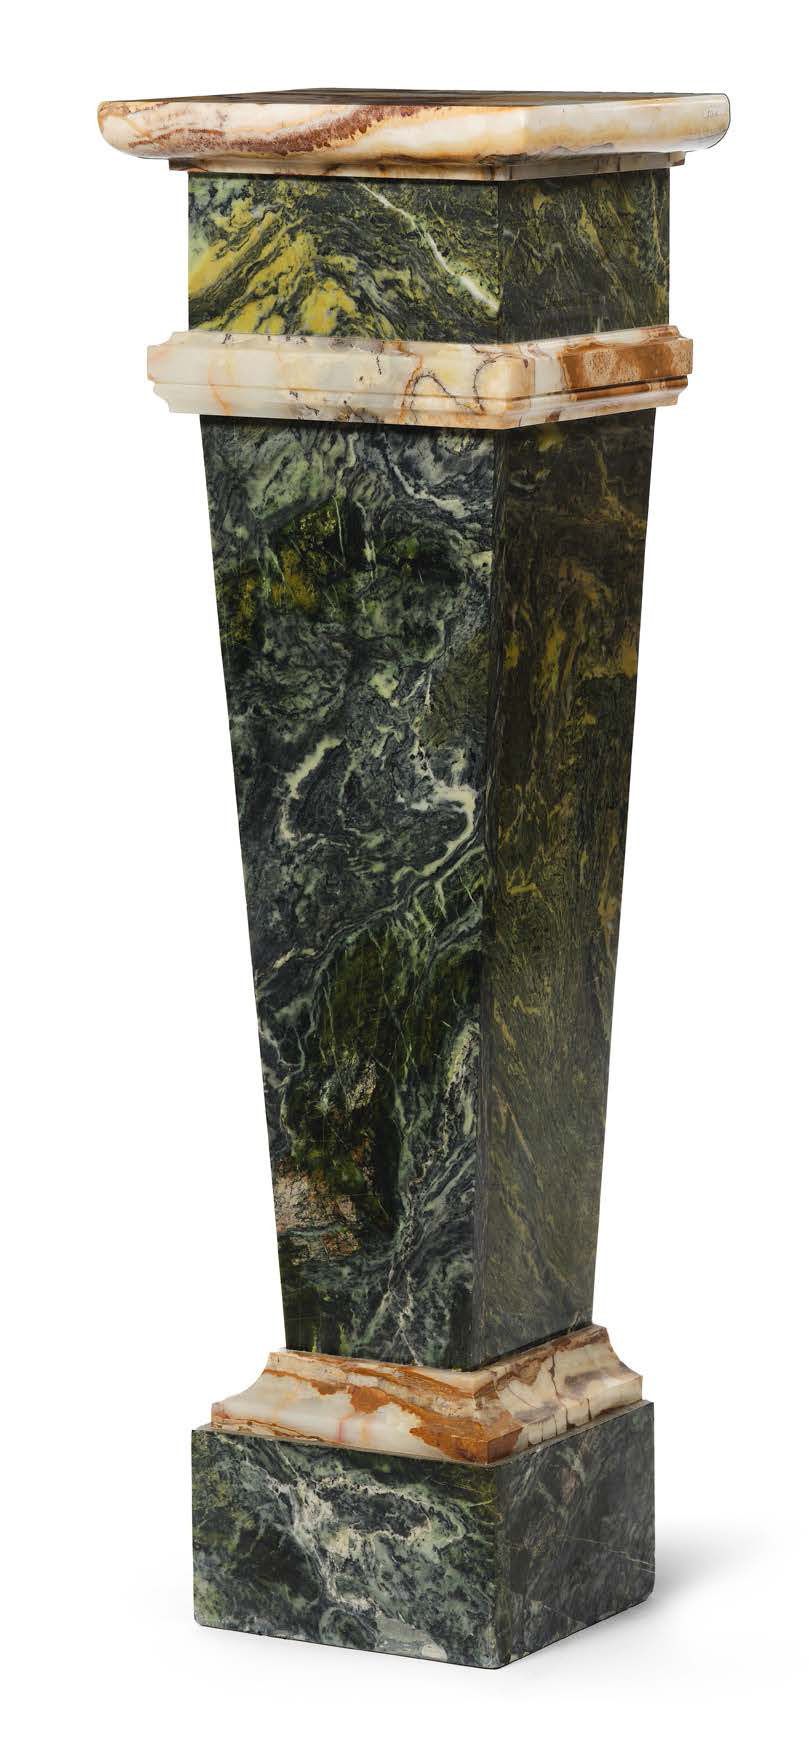 Null 一个大的爱尔兰绿色大理石和玛瑙高脚杯。19世纪。
高度：114厘米 - 宽度：36.5厘米 深度：30.5厘米